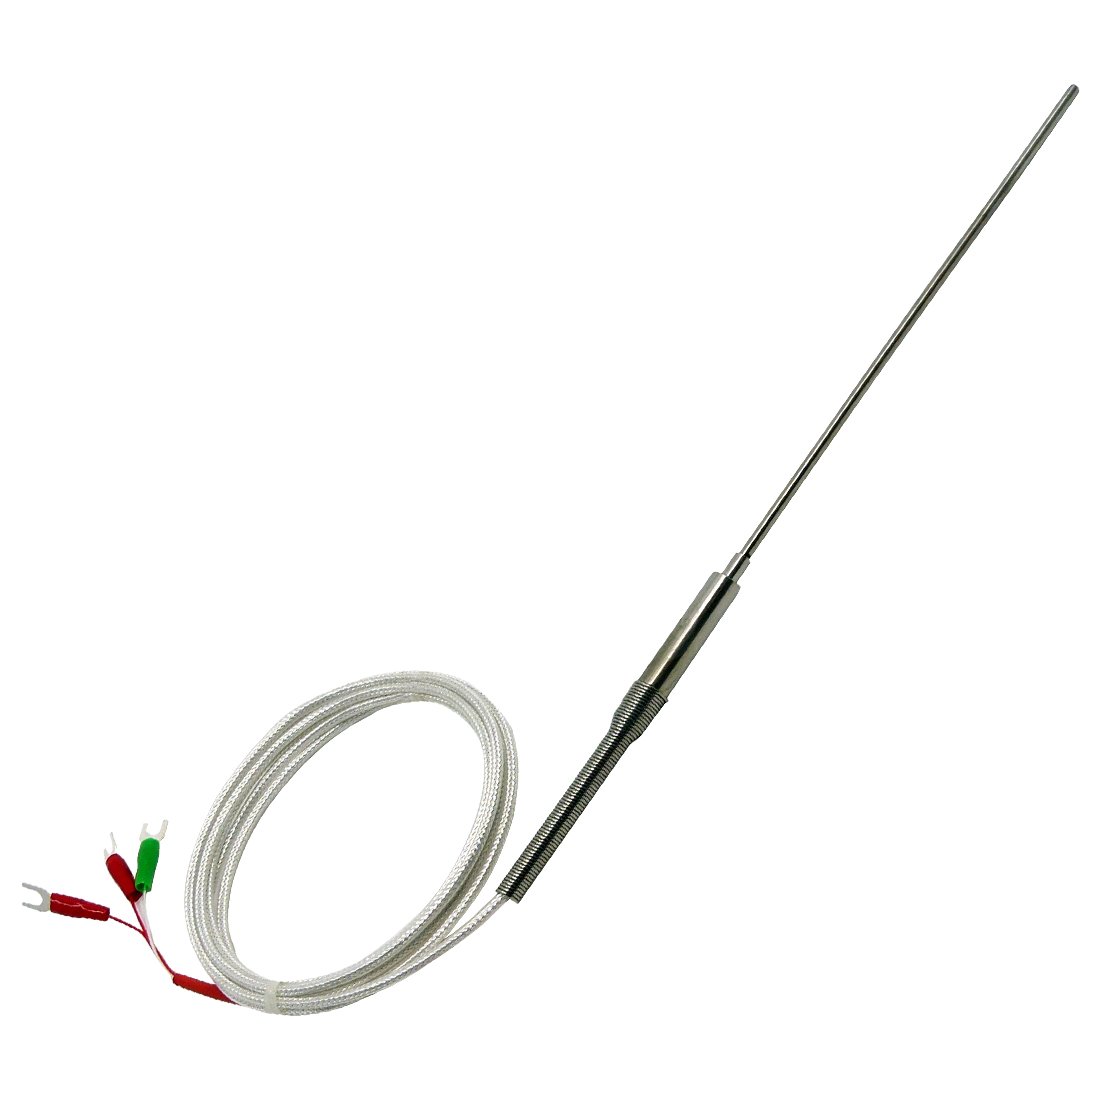 temperature probe with pt100 or thermocouple sensor